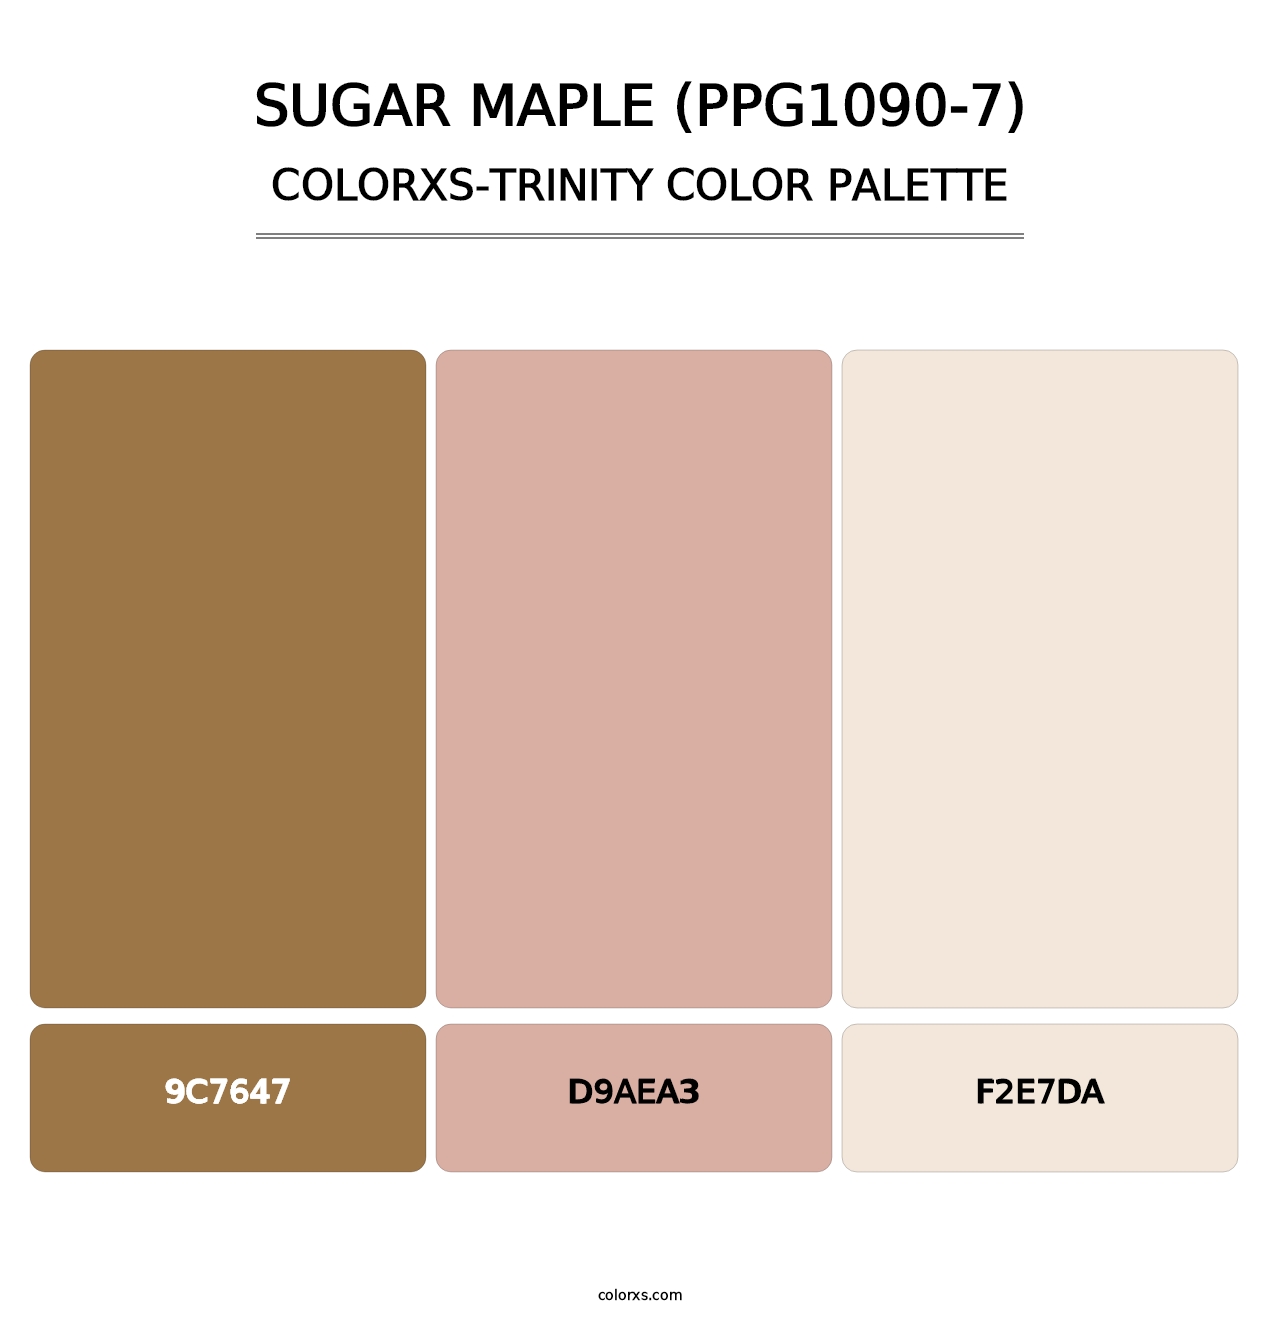 Sugar Maple (PPG1090-7) - Colorxs Trinity Palette